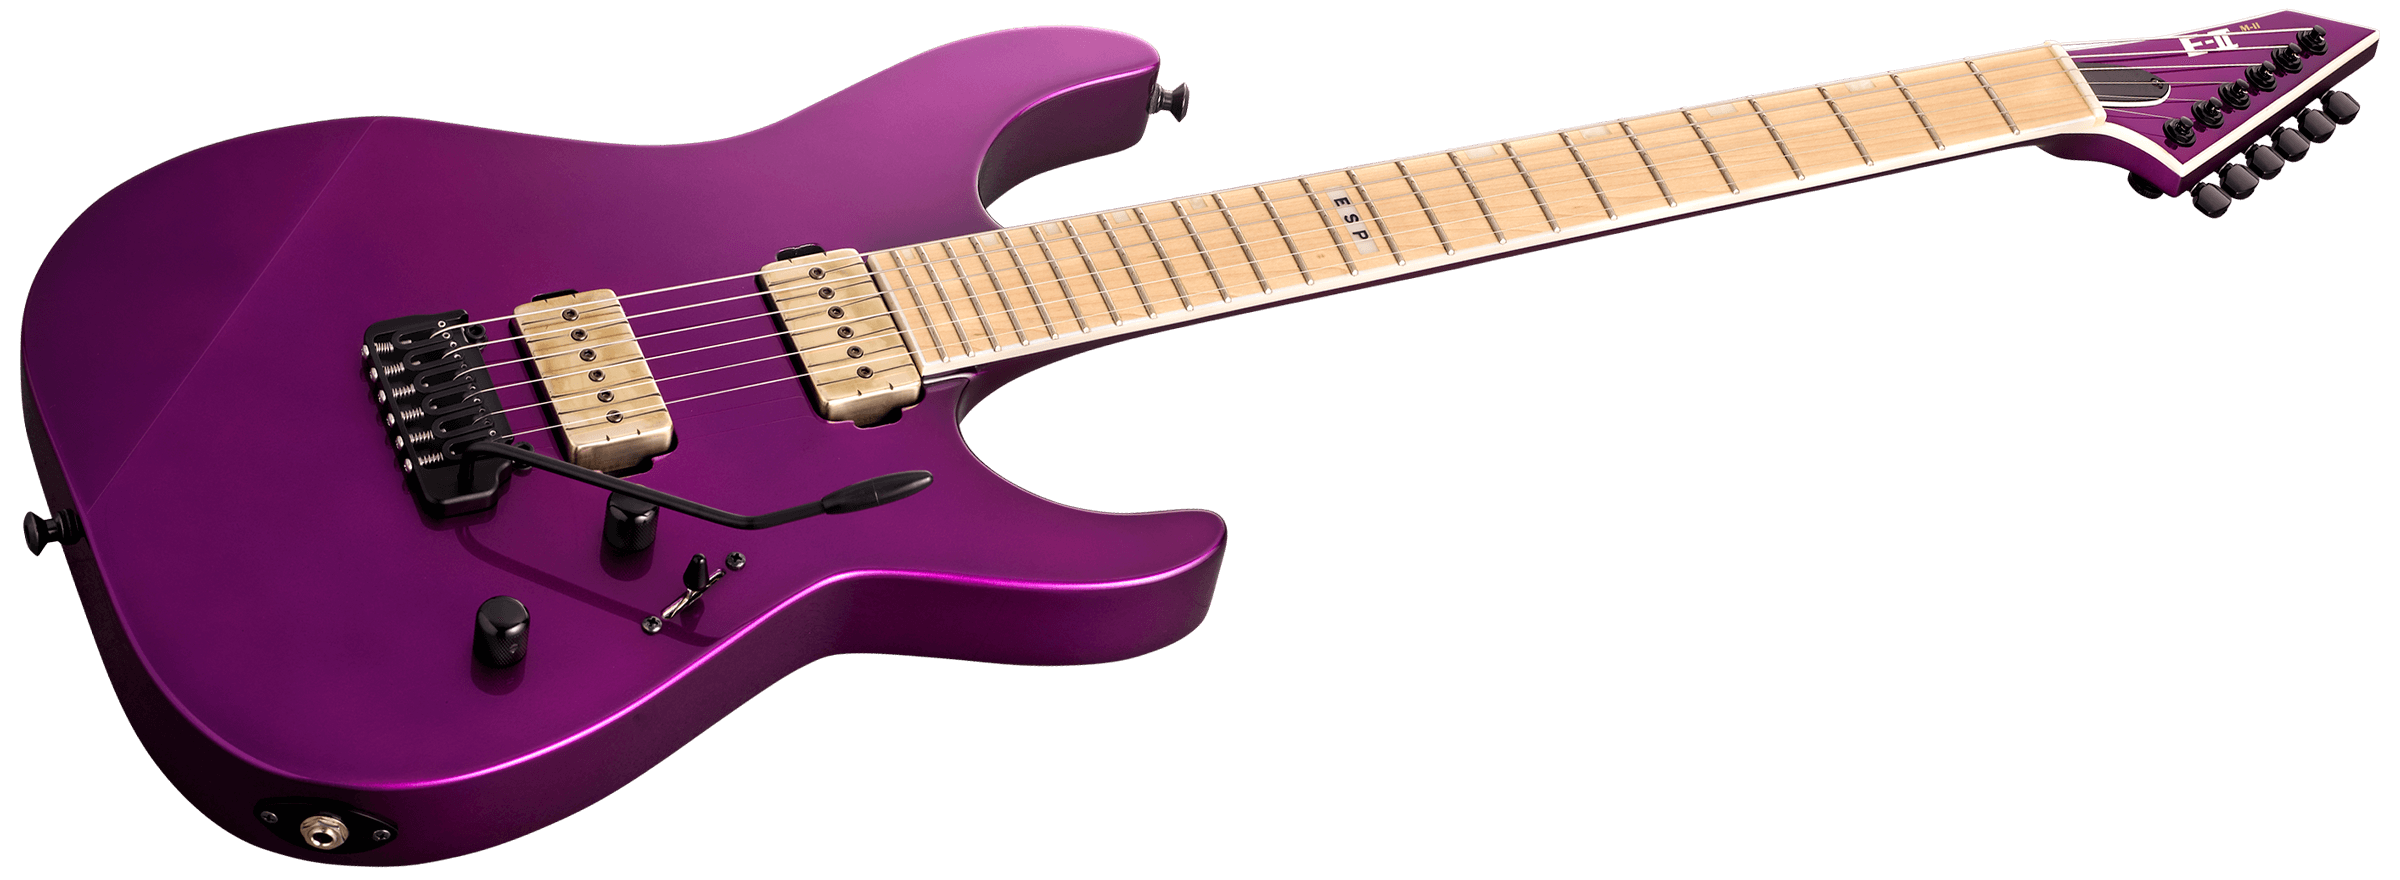 Esp E-ii Mii Hst P Jap 2s P90 Bare Knuckle Trem Mn - Voodoo Purple - Str shape electric guitar - Variation 2